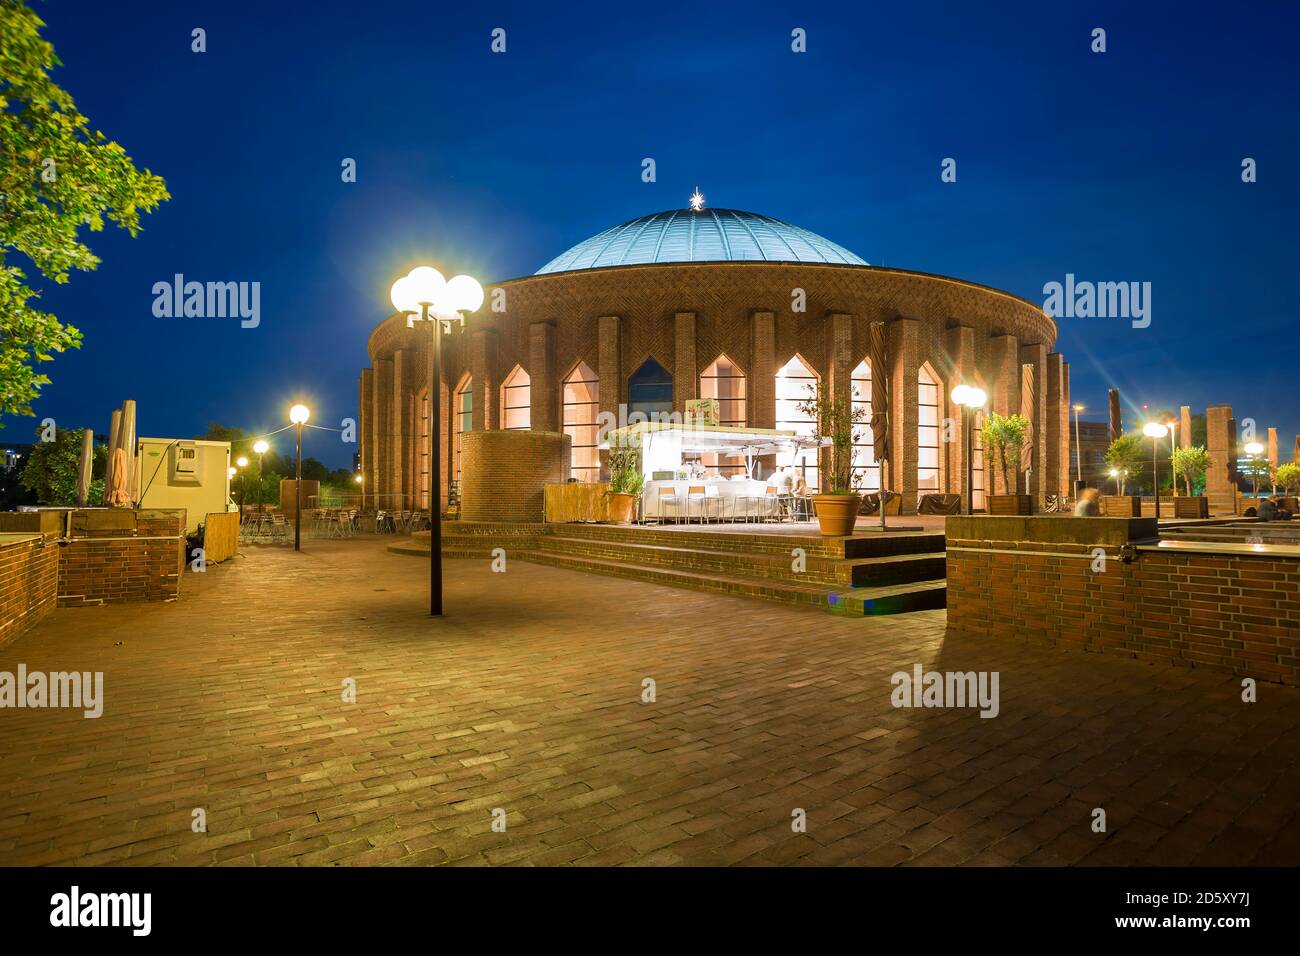 Germany, Dusseldorf, concert hall at night Stock Photo